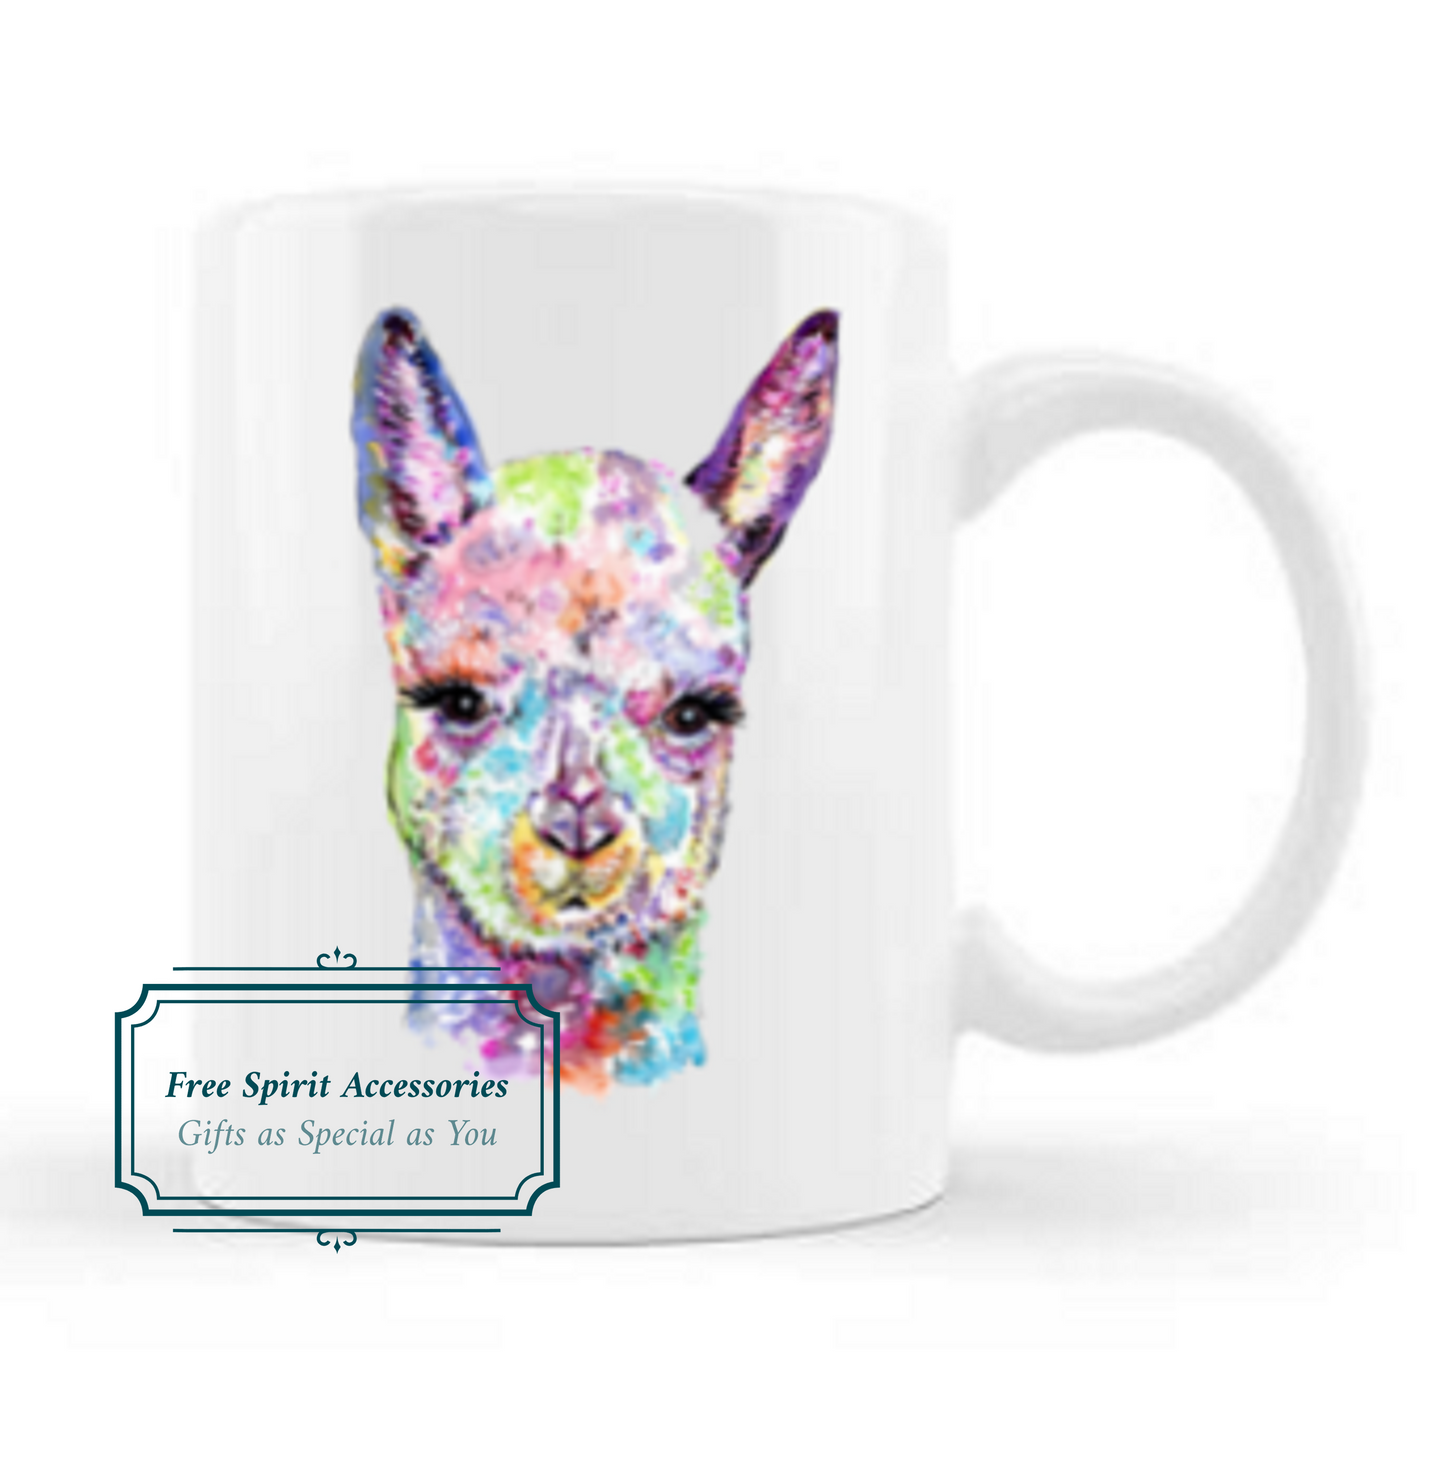  Beautiful Watercolour Alpaca Coffee Mug by Free Spirit Accessories sold by Free Spirit Accessories